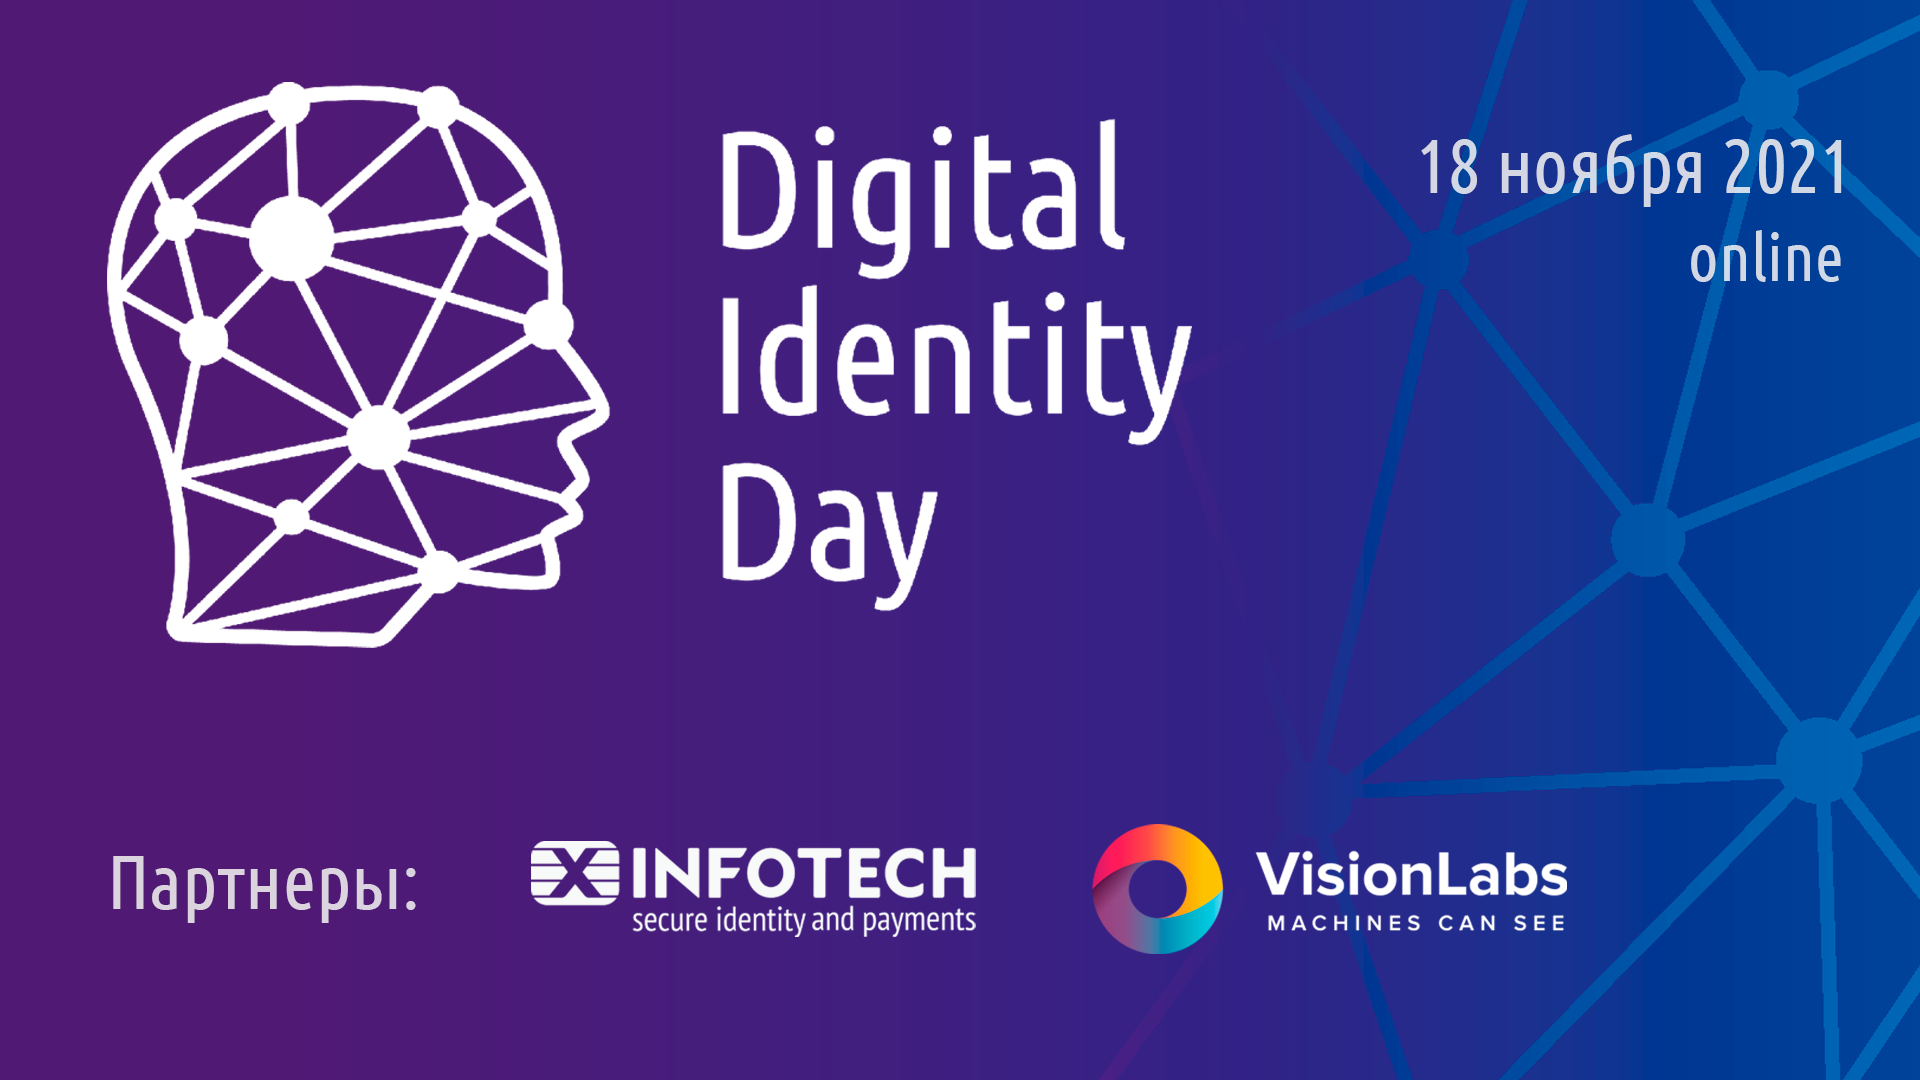 Онлайн-конференция Digital Identity Day пройдет 18 ноября